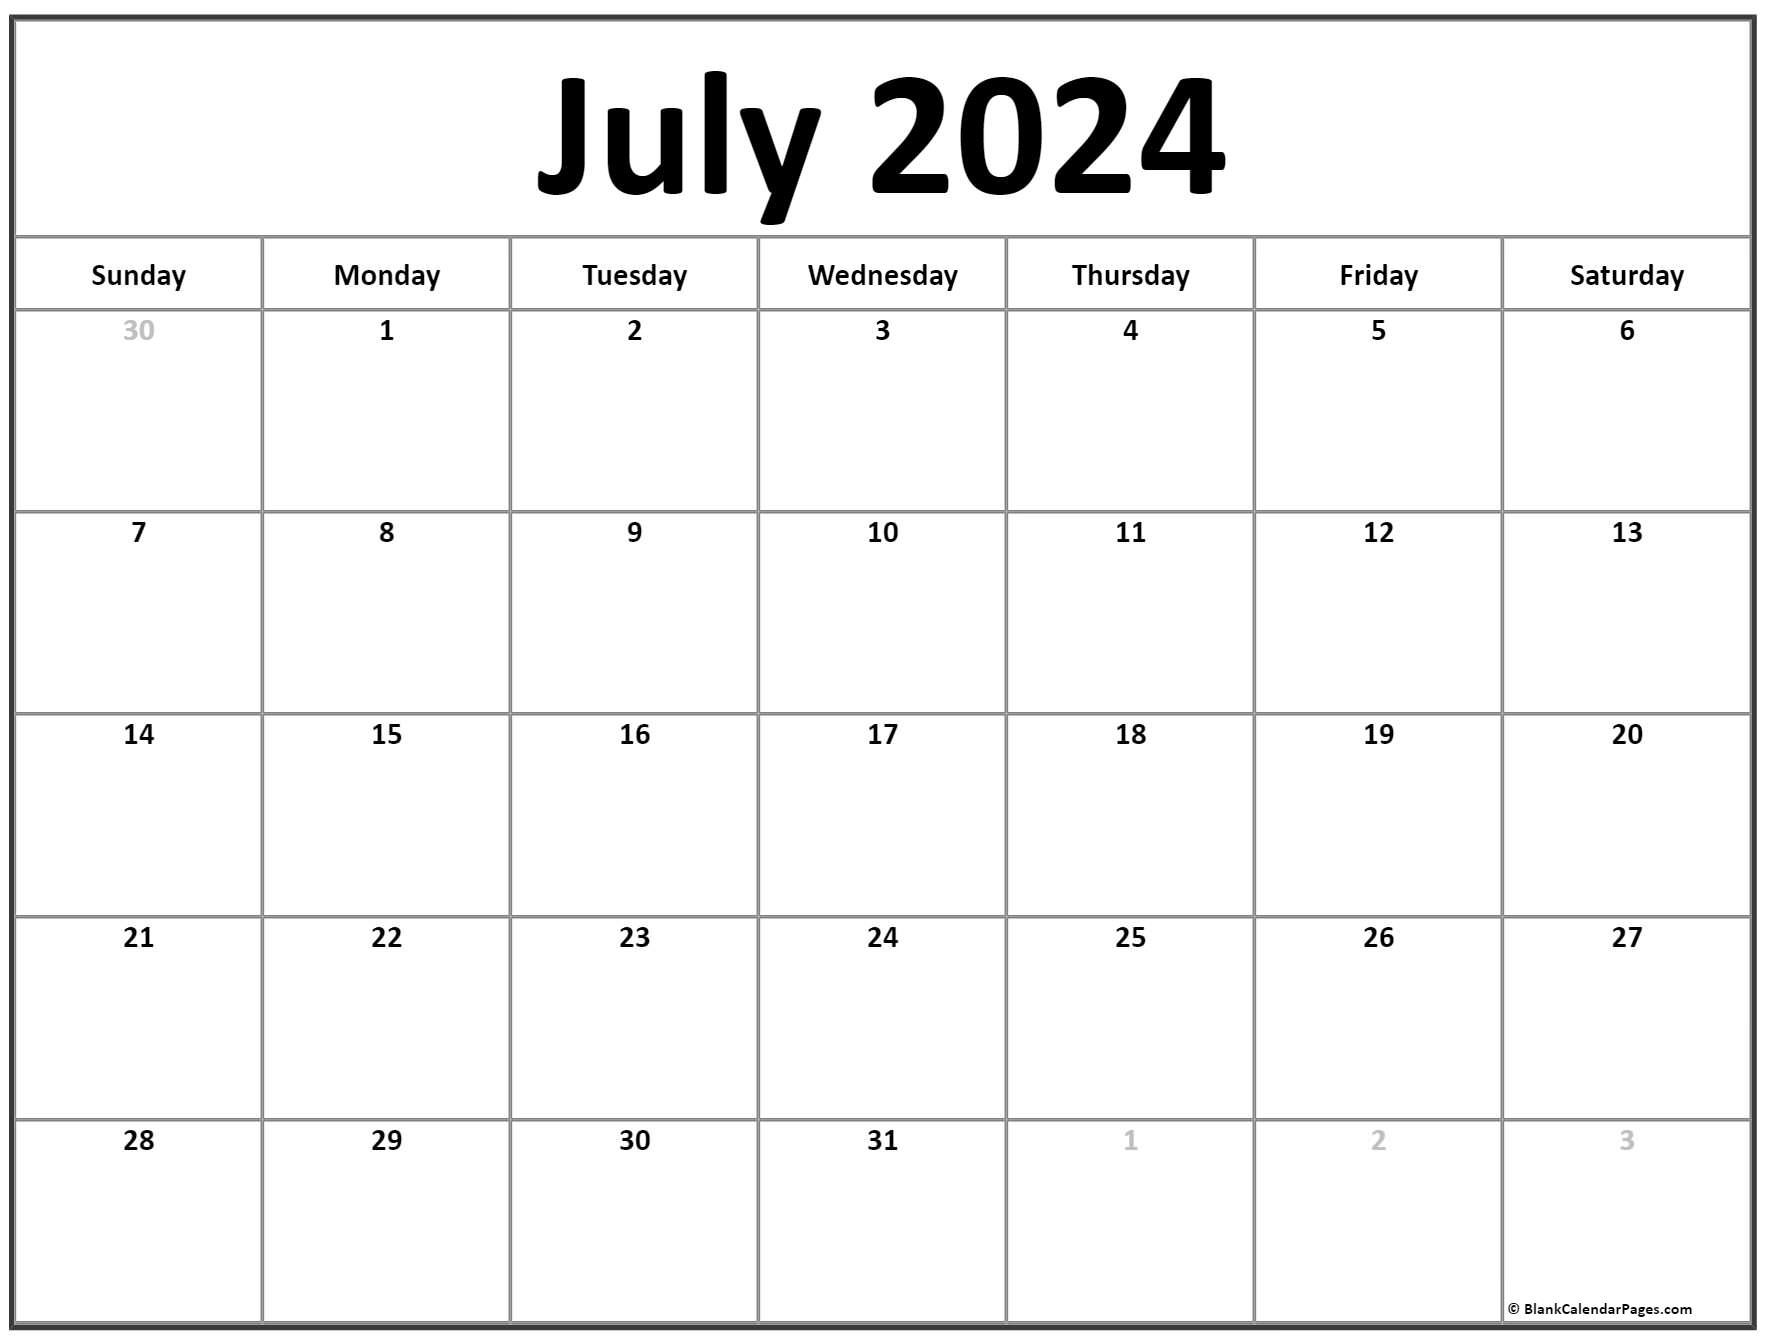 July 2021 calendar | free printable monthly calendars